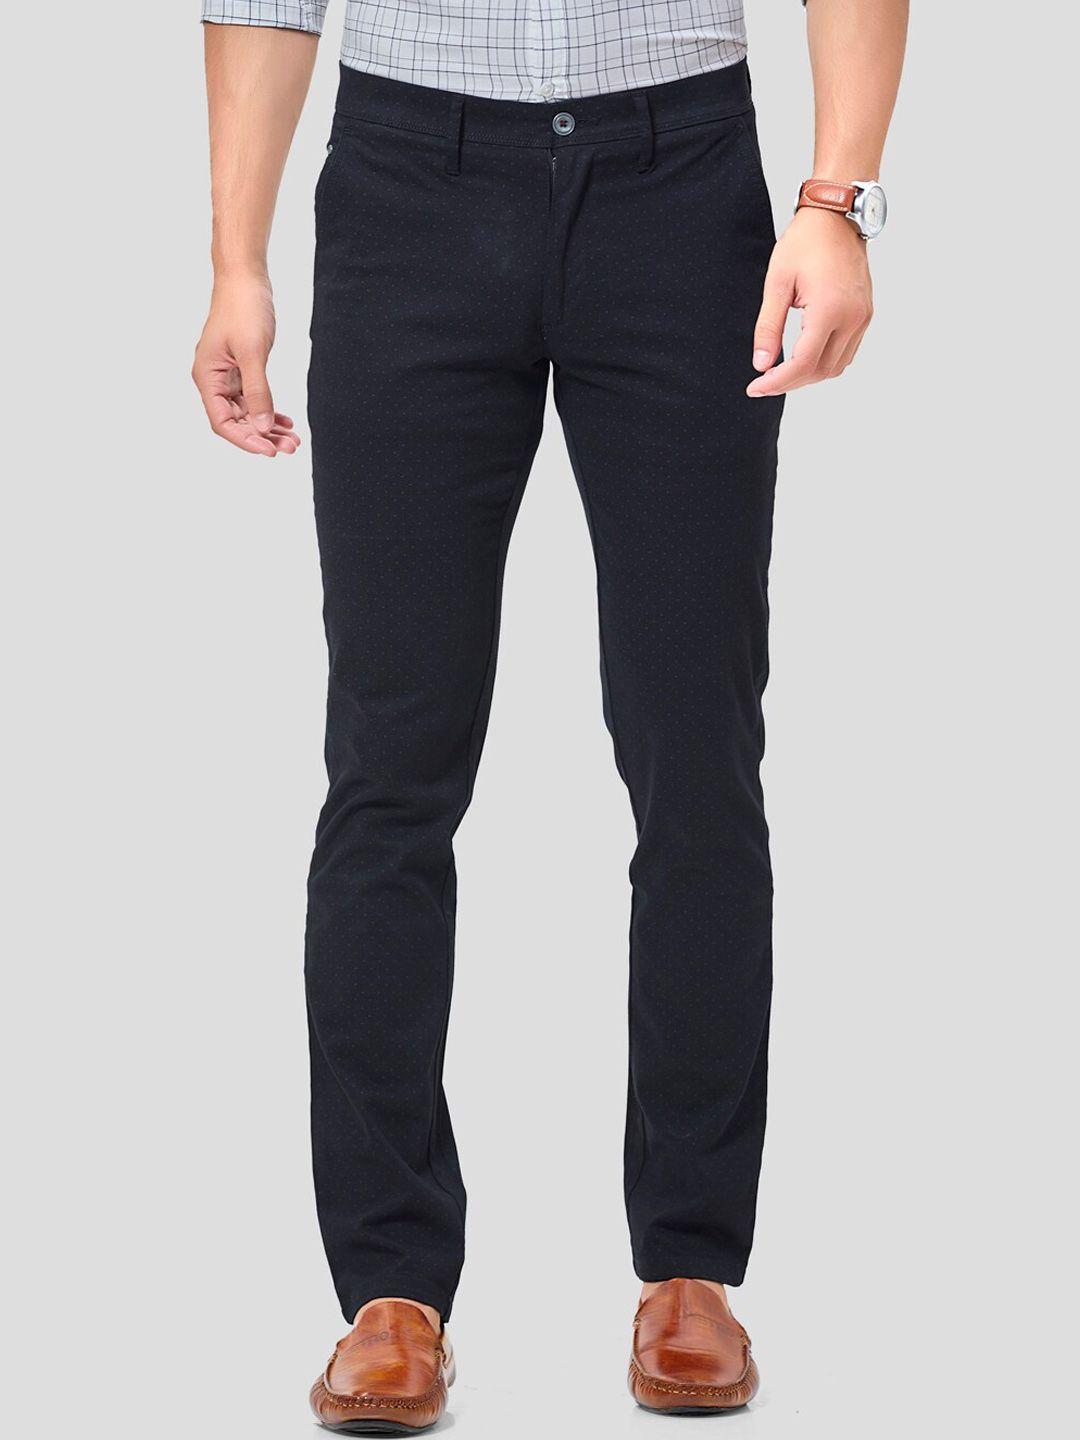 oxemberg-men-black-printed-smart-slim-fit-chinos-trousers